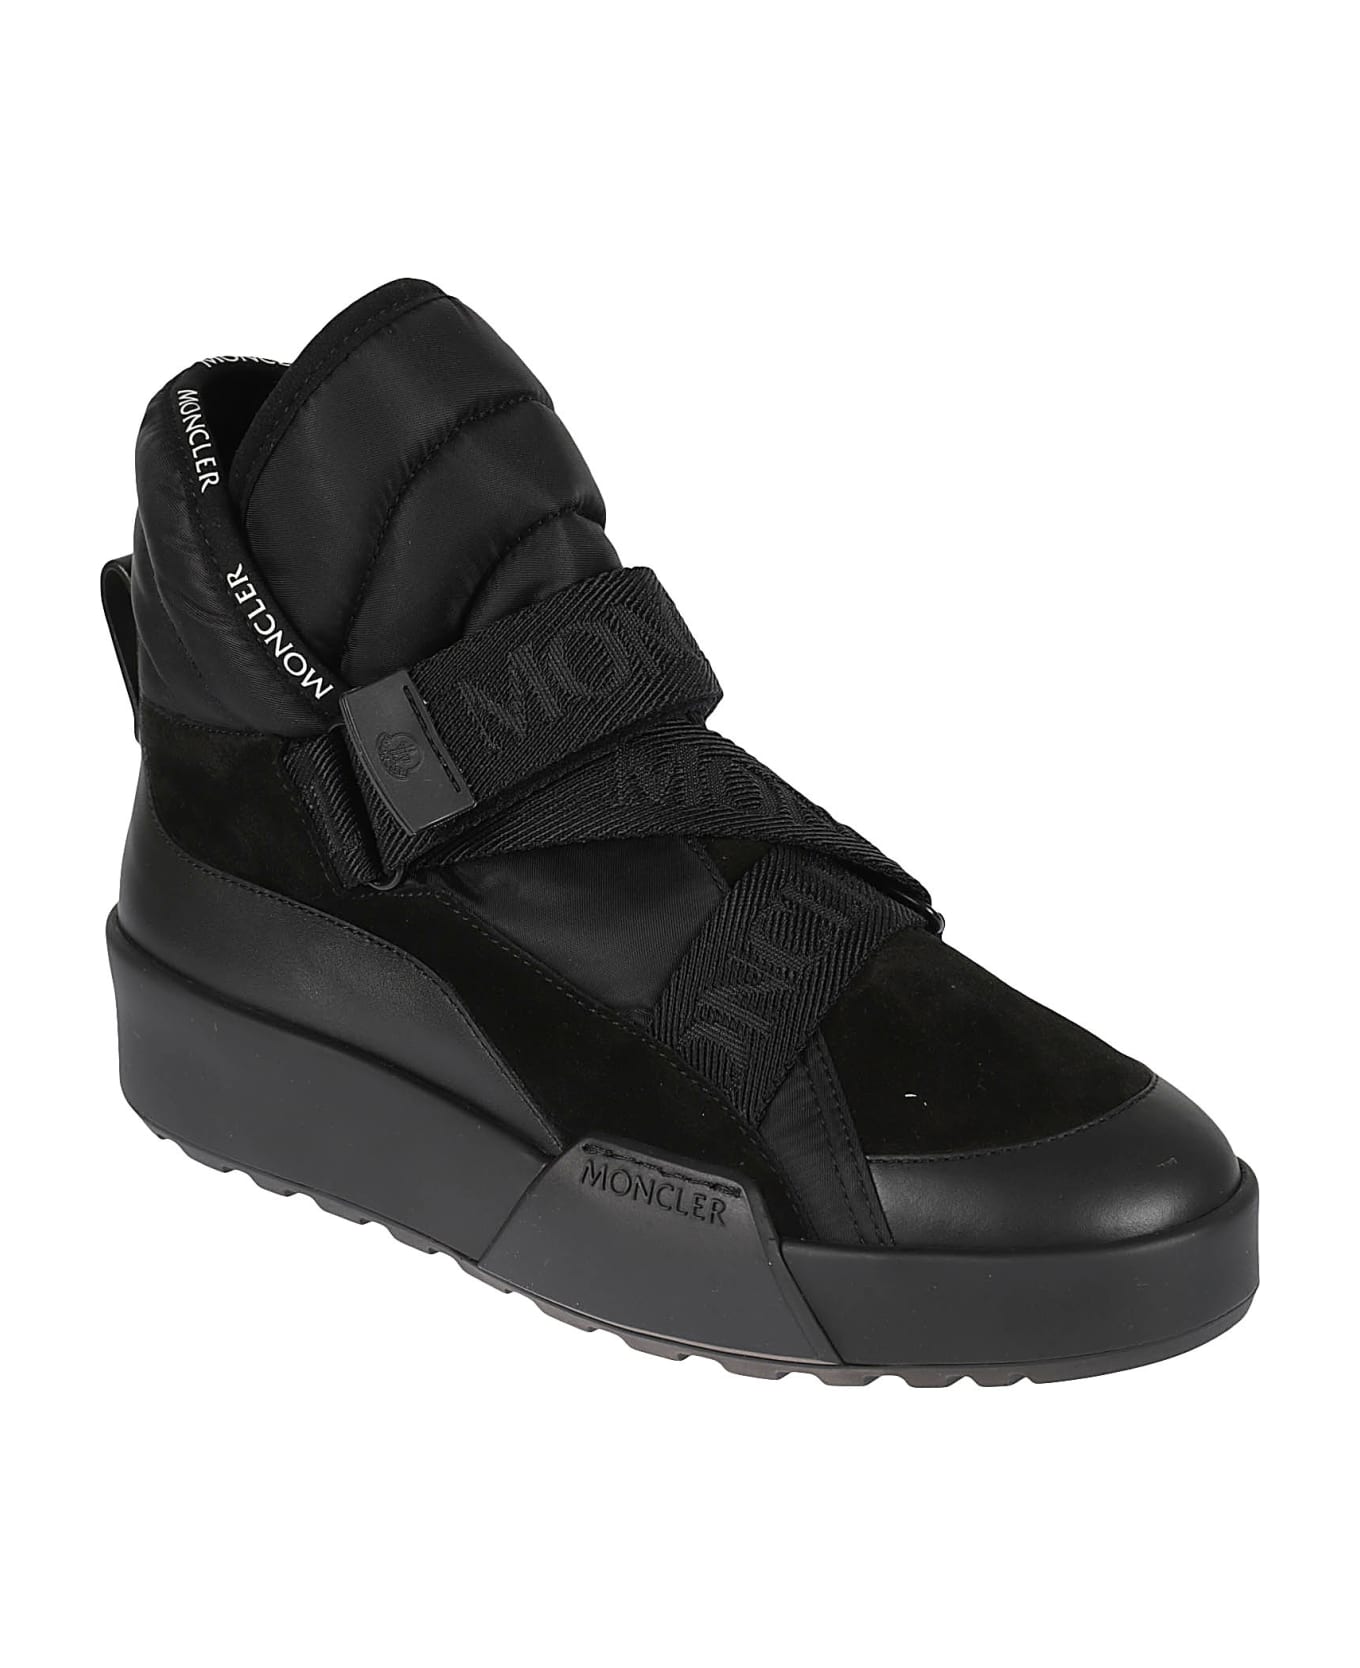 Moncler Cross Promyx Sneakers - Black